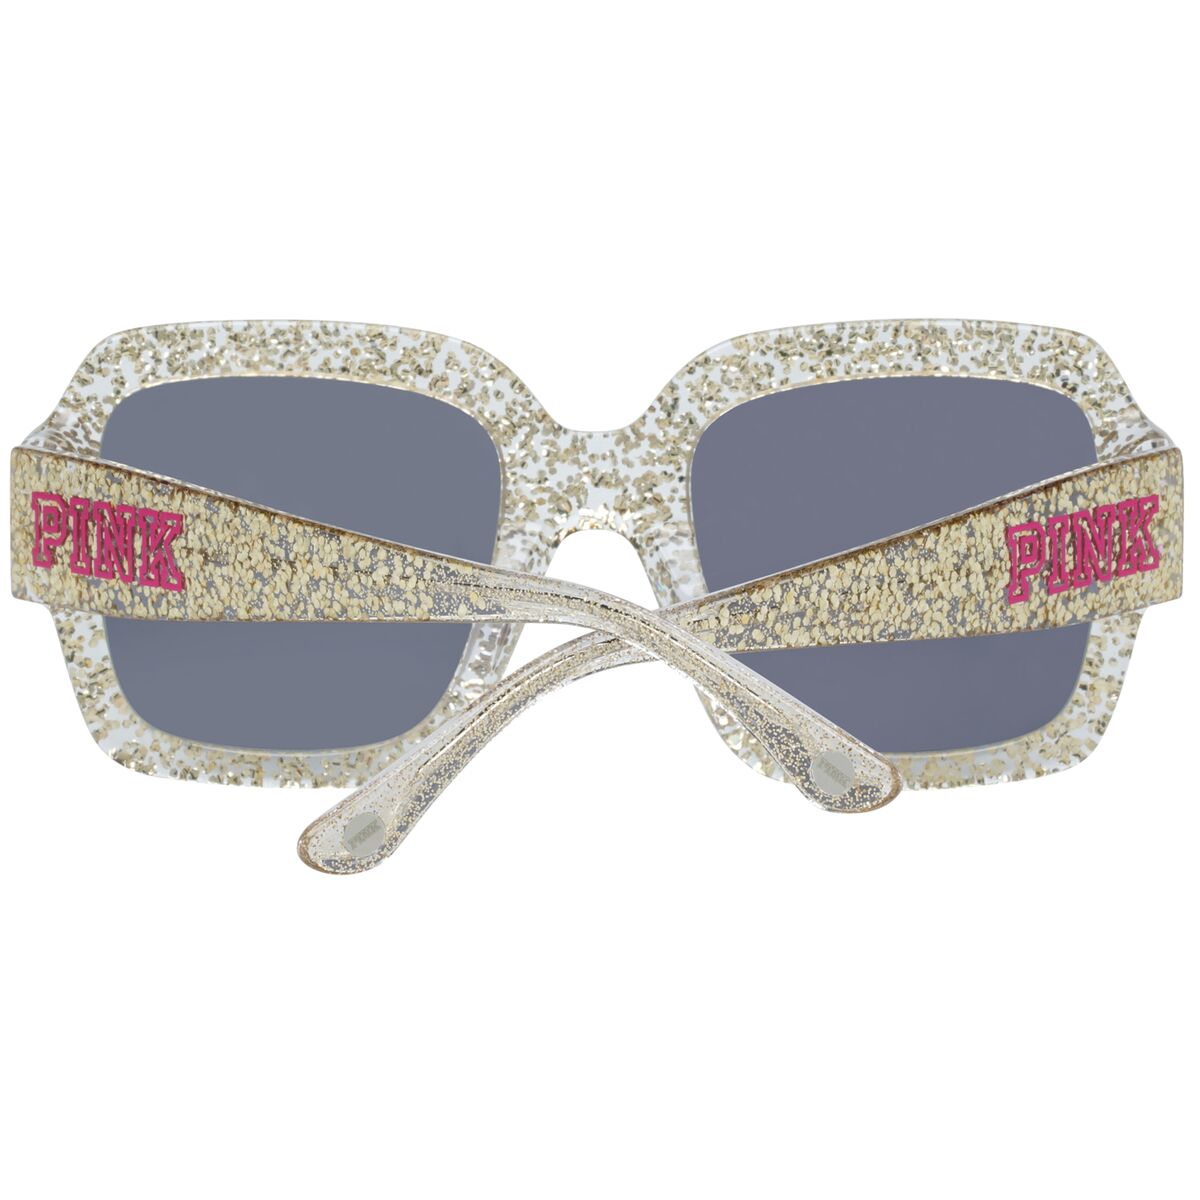 Kaufe Damensonnenbrille Victoria's Secret bei AWK Flagship um € 59.00